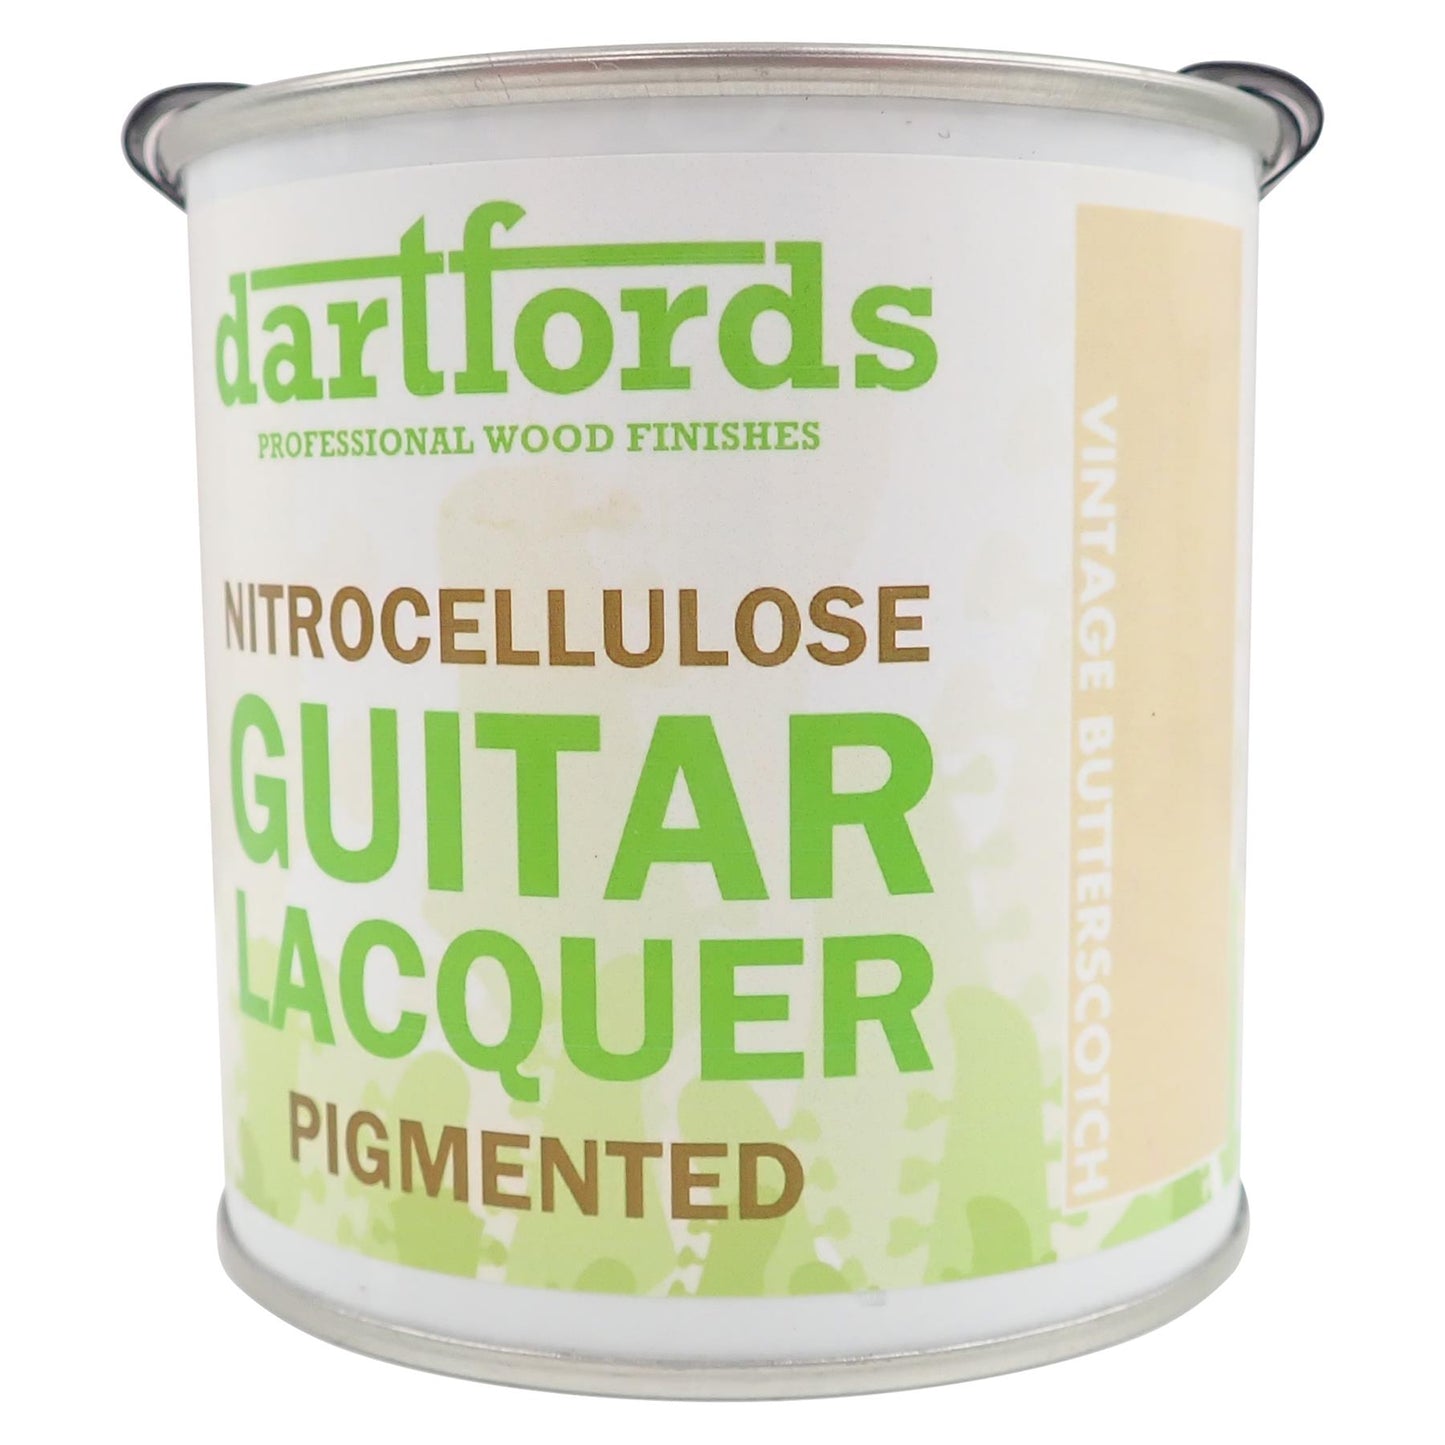 dartfords Vintage Butterscotch Pigmented Nitrocellulose Guitar Lacquer - 230ml Tin